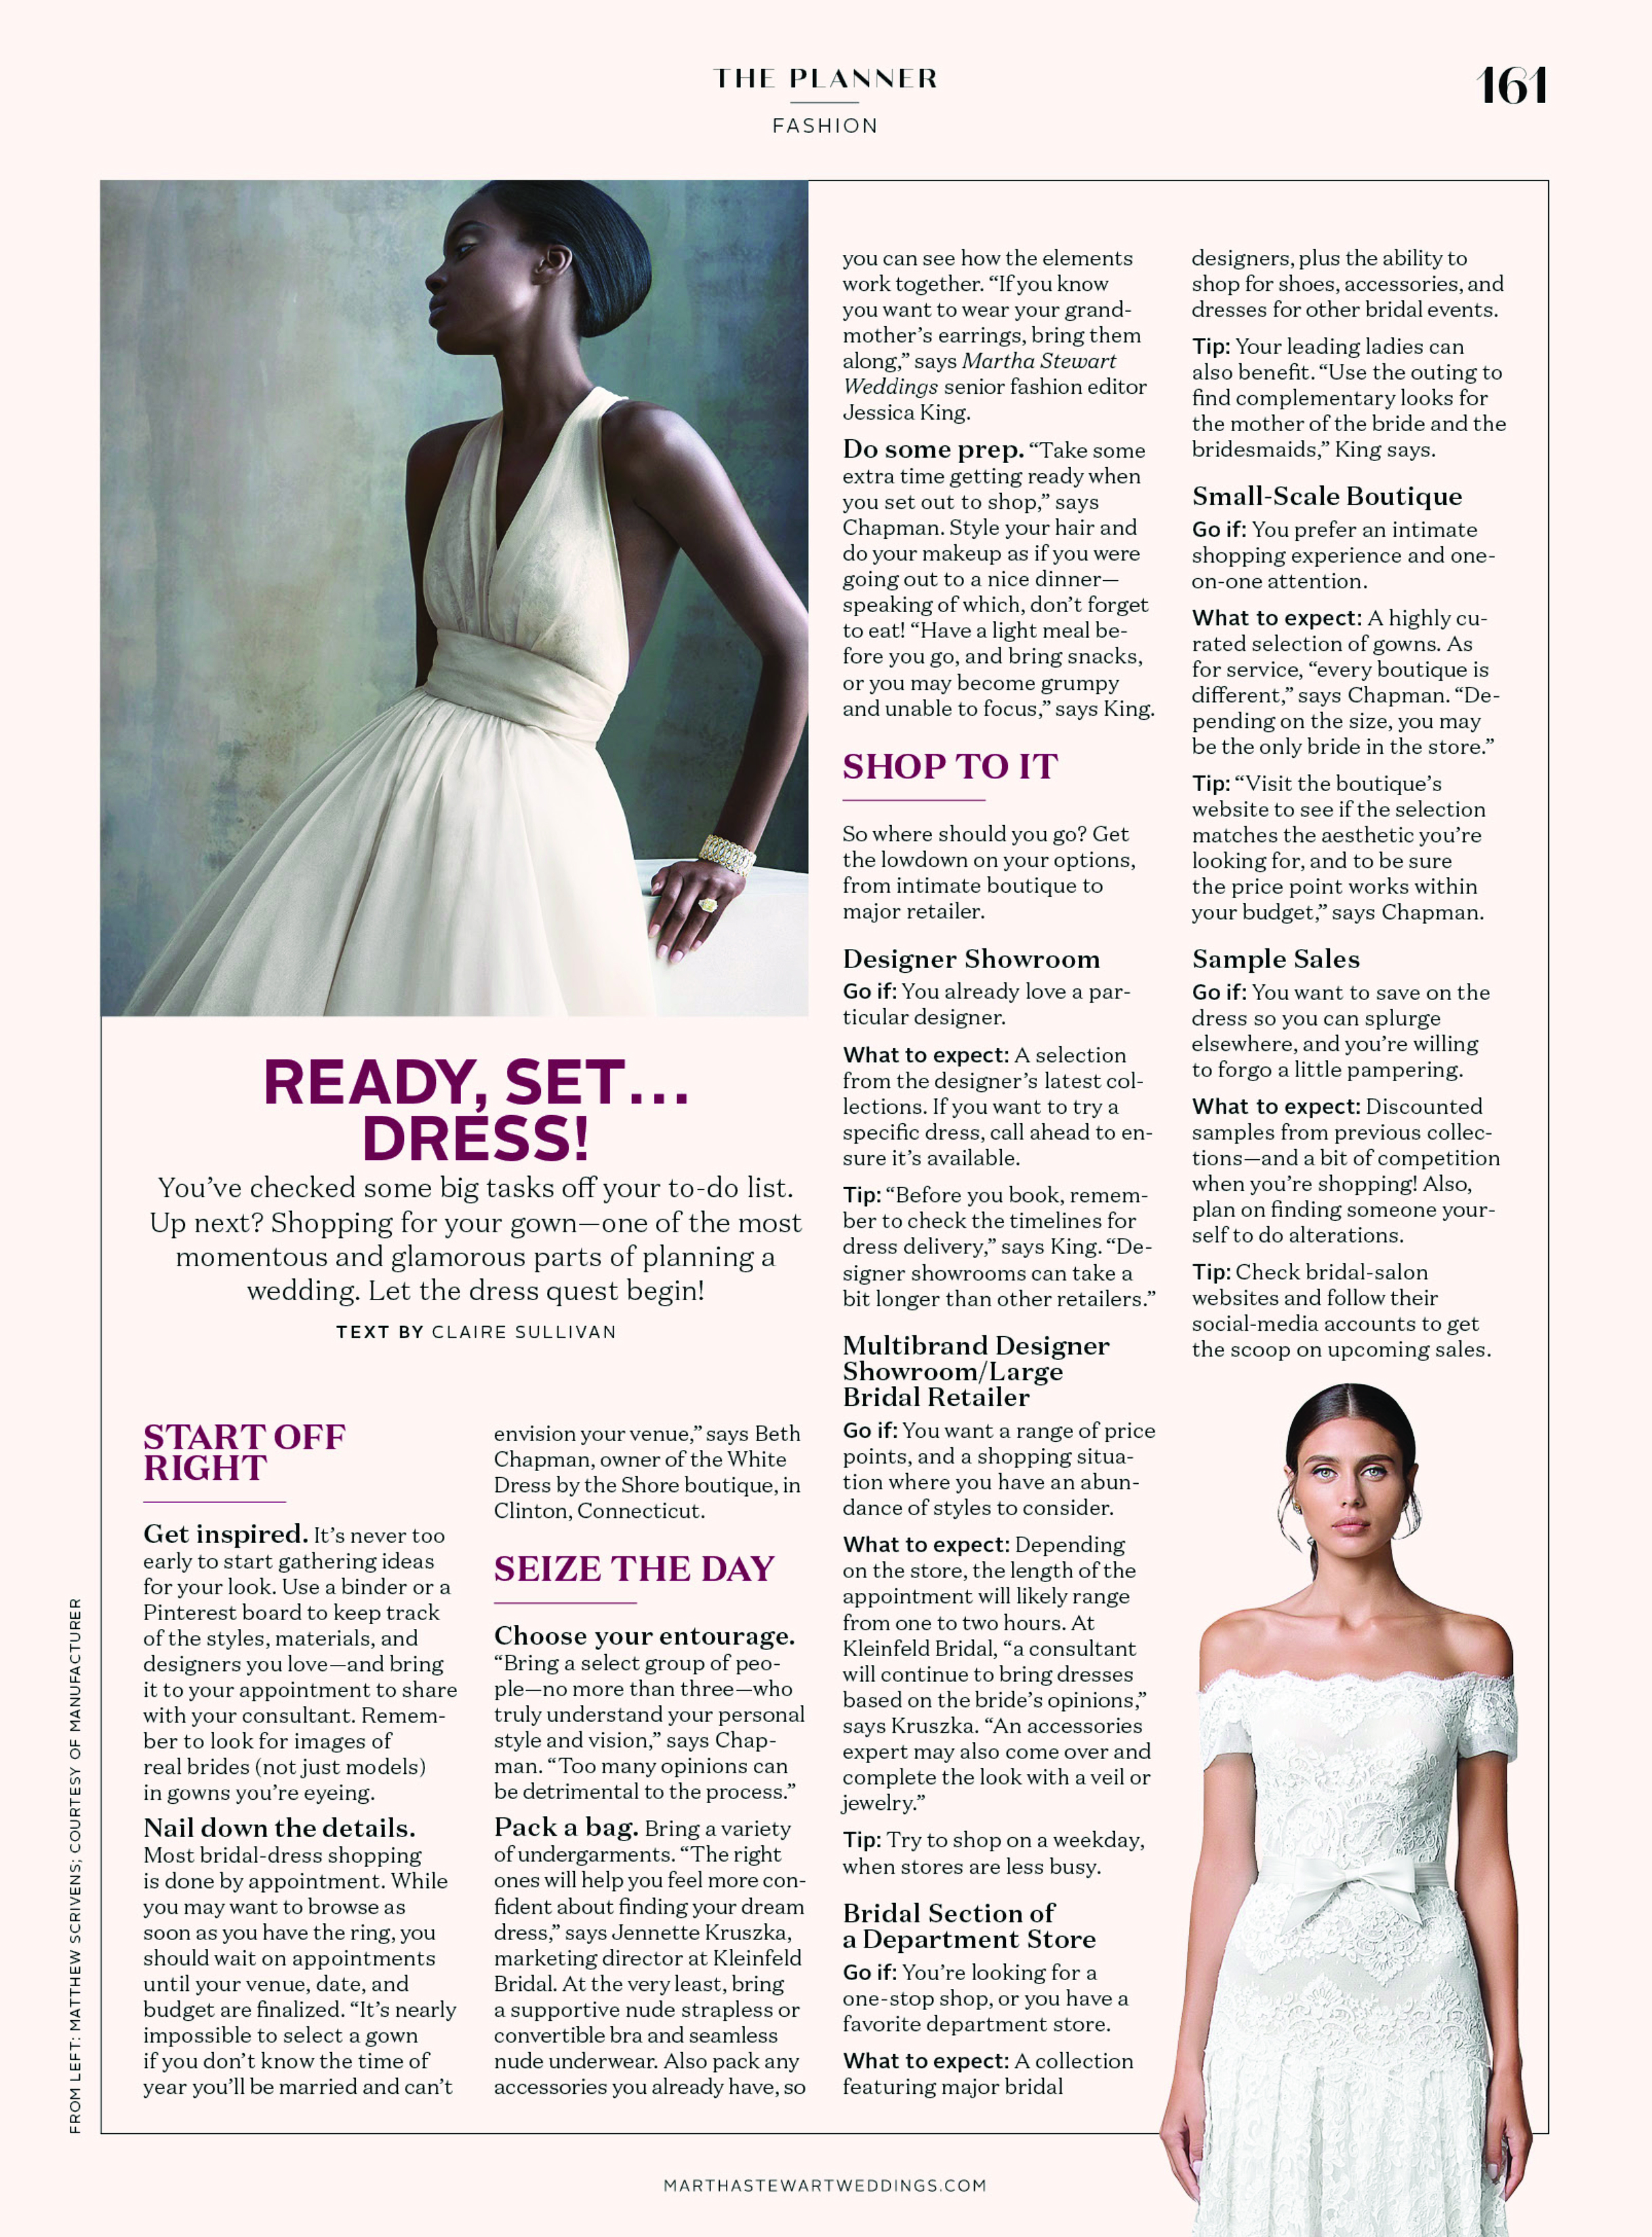 TWD owner, Beth Chapman&#39;s Tips for Wedding Gown Shopping in Martha Stewart Weddings. Desktop Image